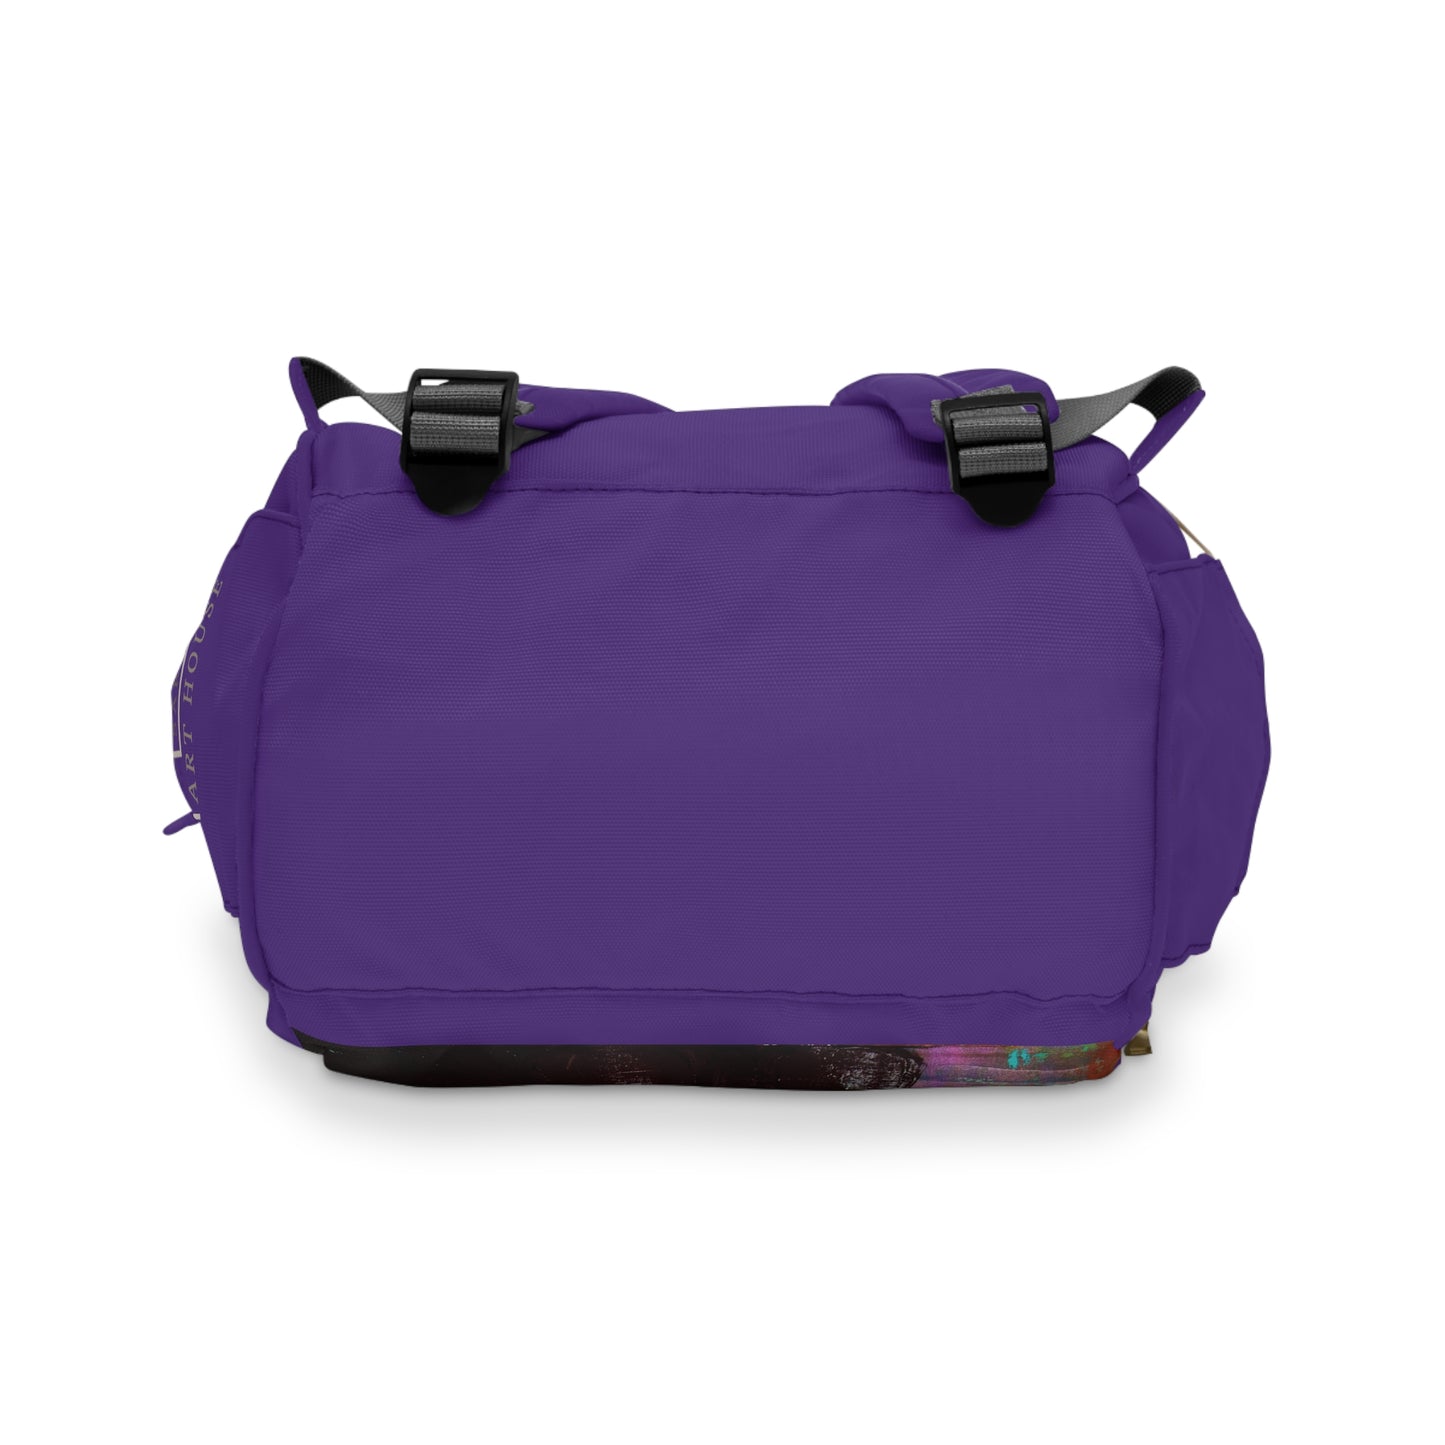 Backpack - Book Bag - Multipurpose Backpack - Diaper bag -Tommy